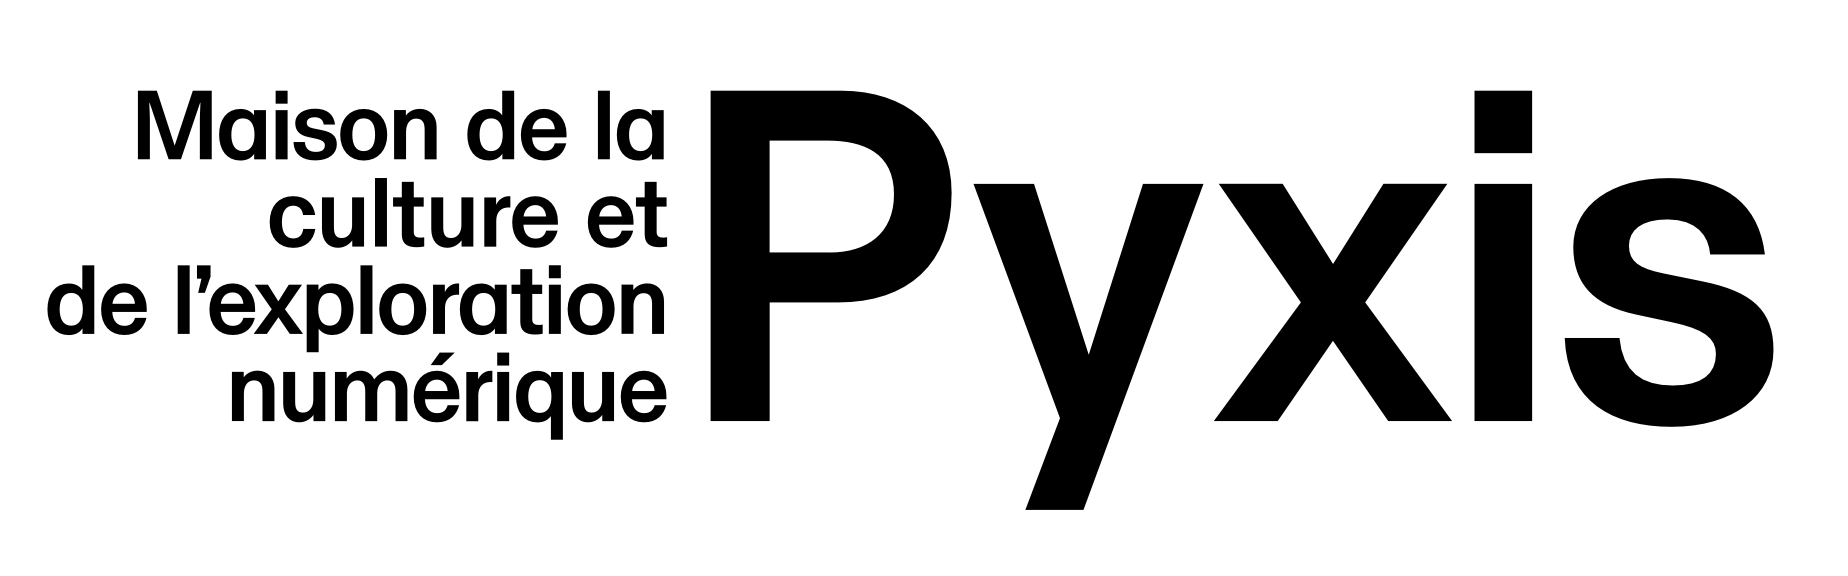 Pyxis_logo.png